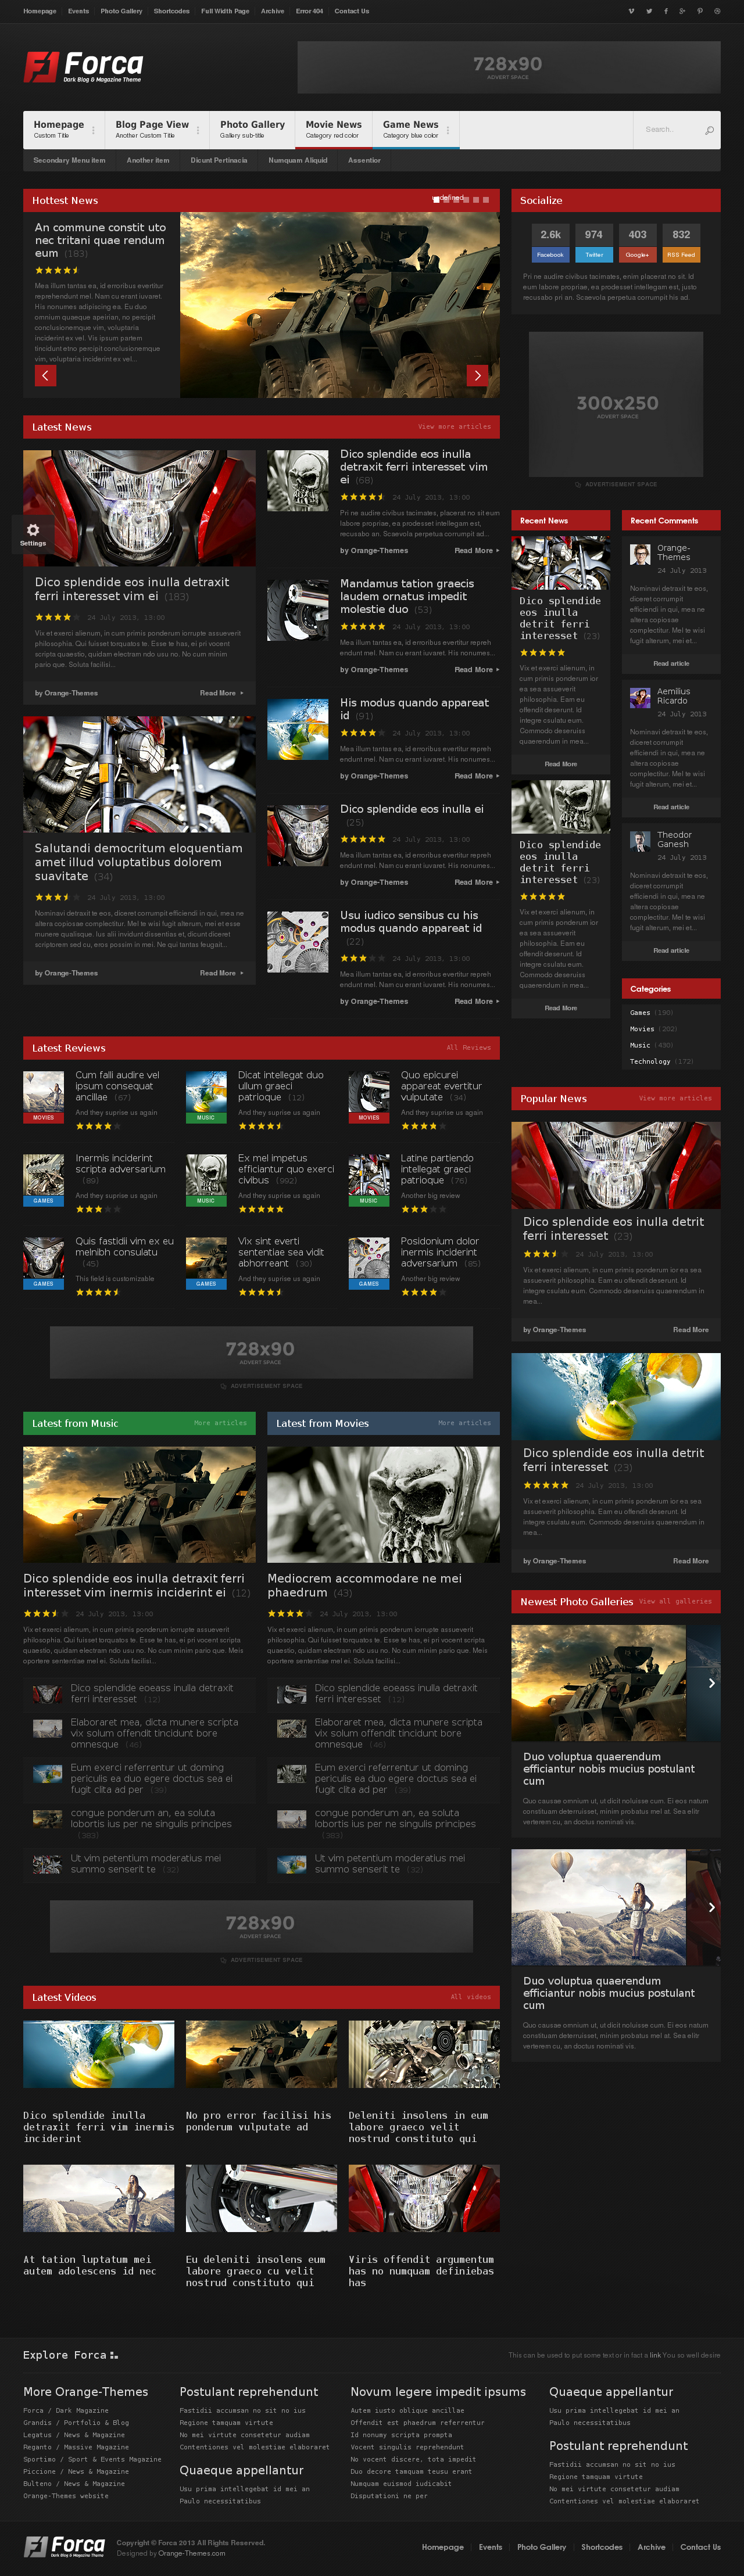 Forca - Responsive News-Magazine HTML Template